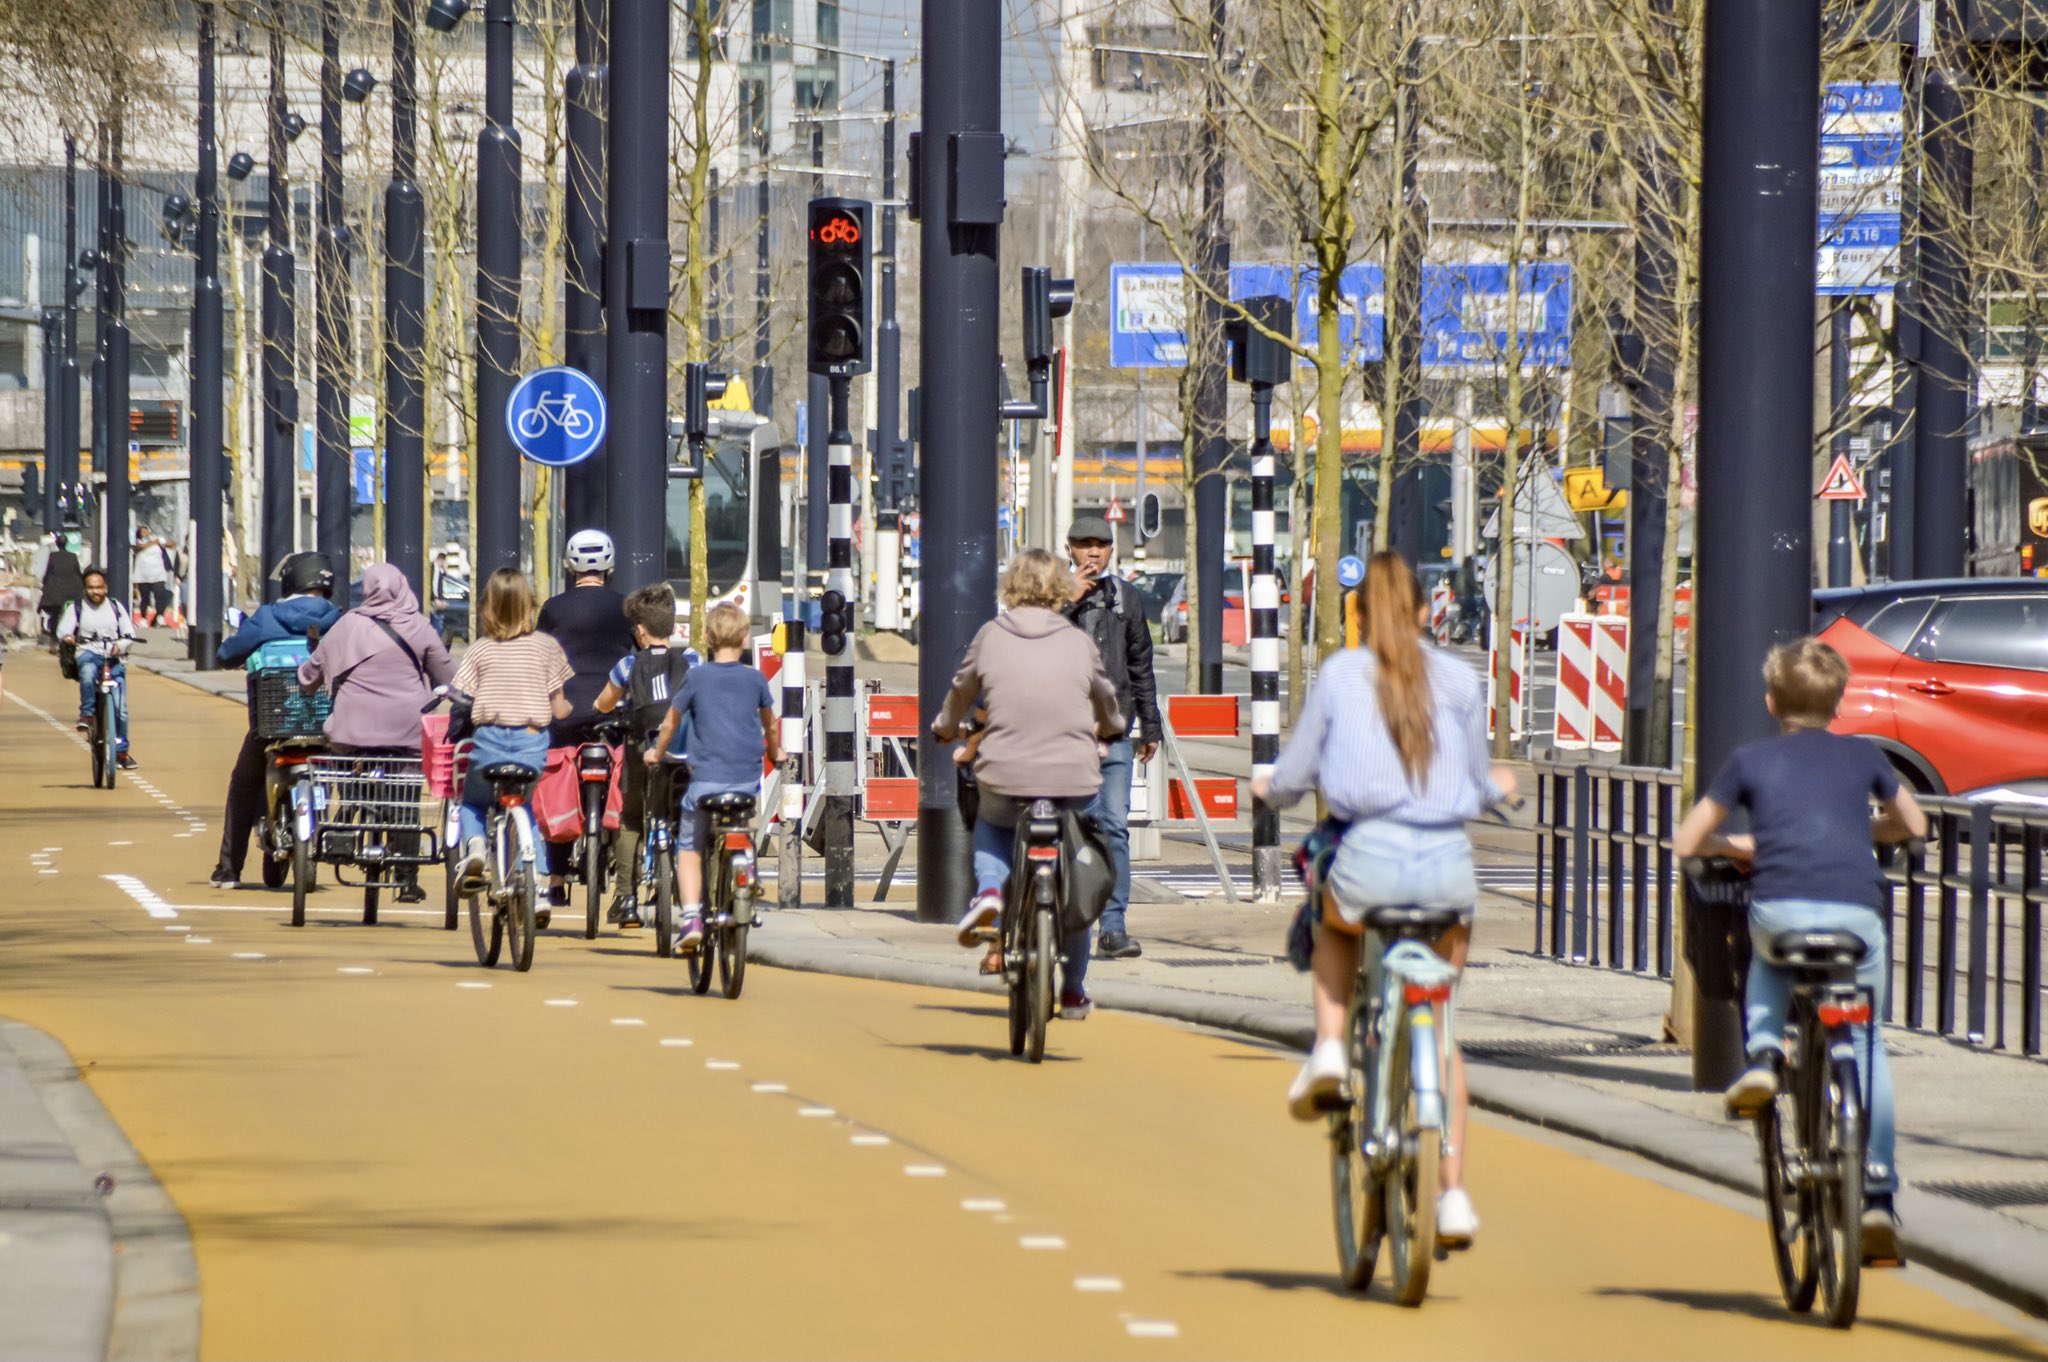 Coolsingel Rotterdam|McDonald Rotterdam|McDonalds Rotterdam|Tramwaje Rotterdam|rowery w Rotterdamie|Rotterdam rowery